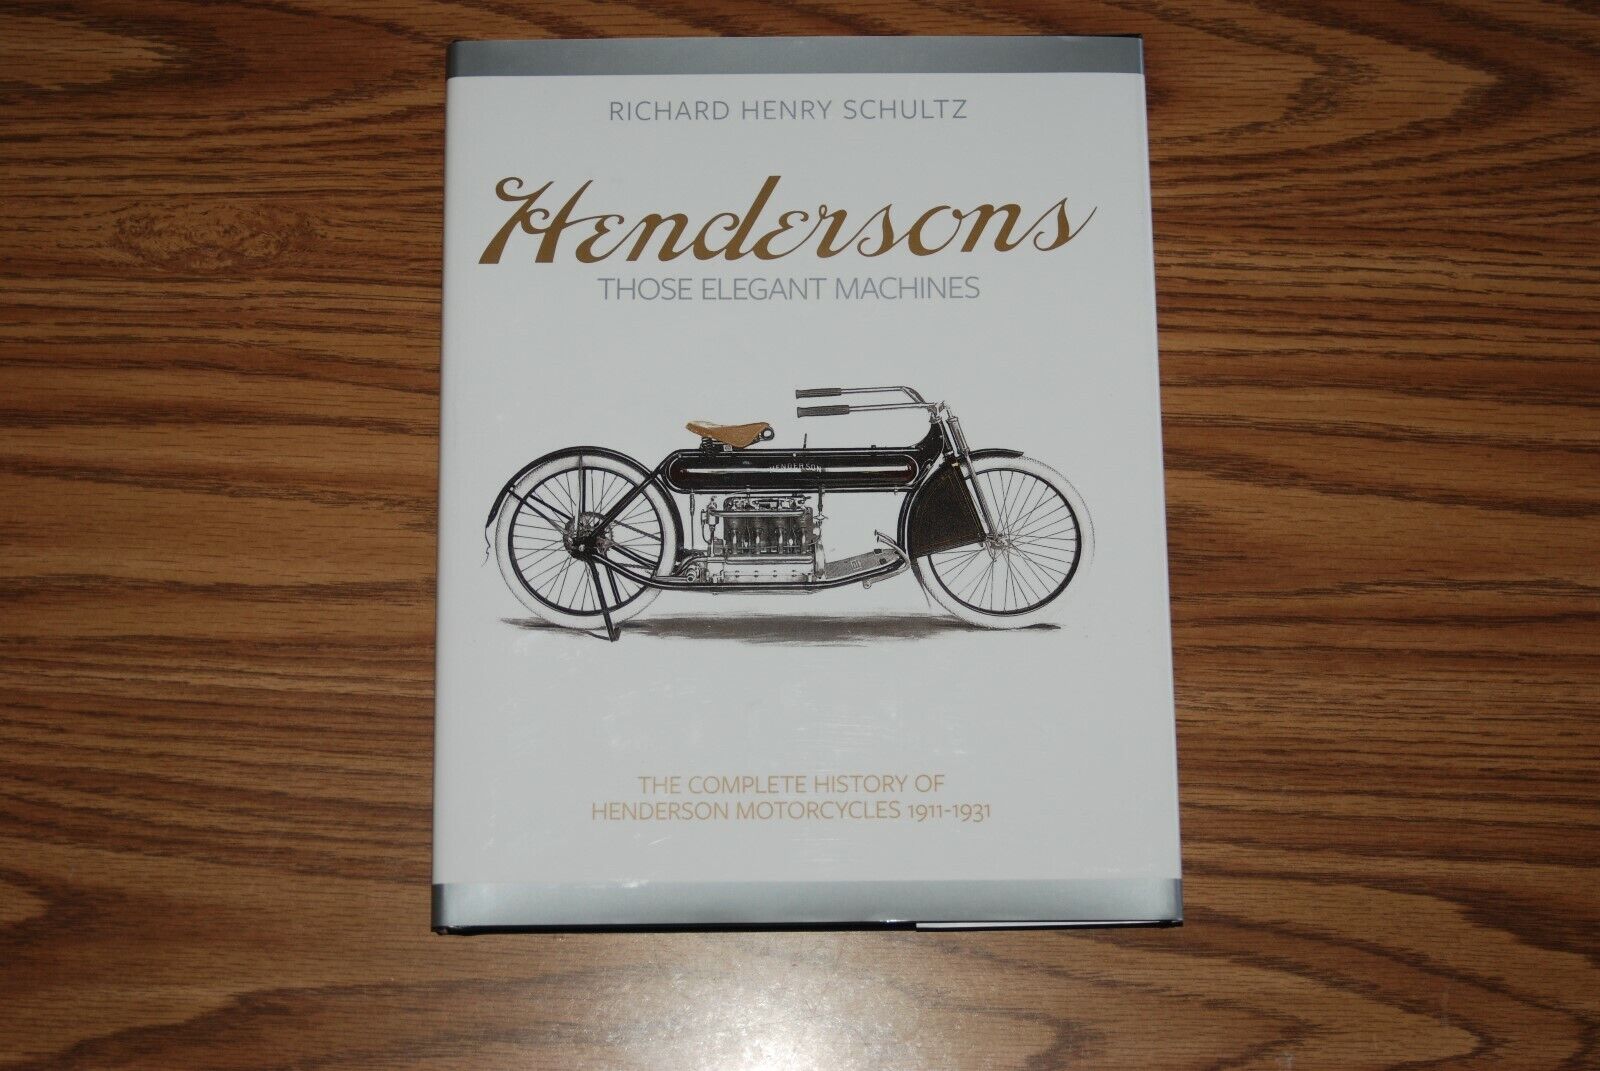 Hendersons: Those Elegant Machines Books Vol I. Complete history 1911-1931